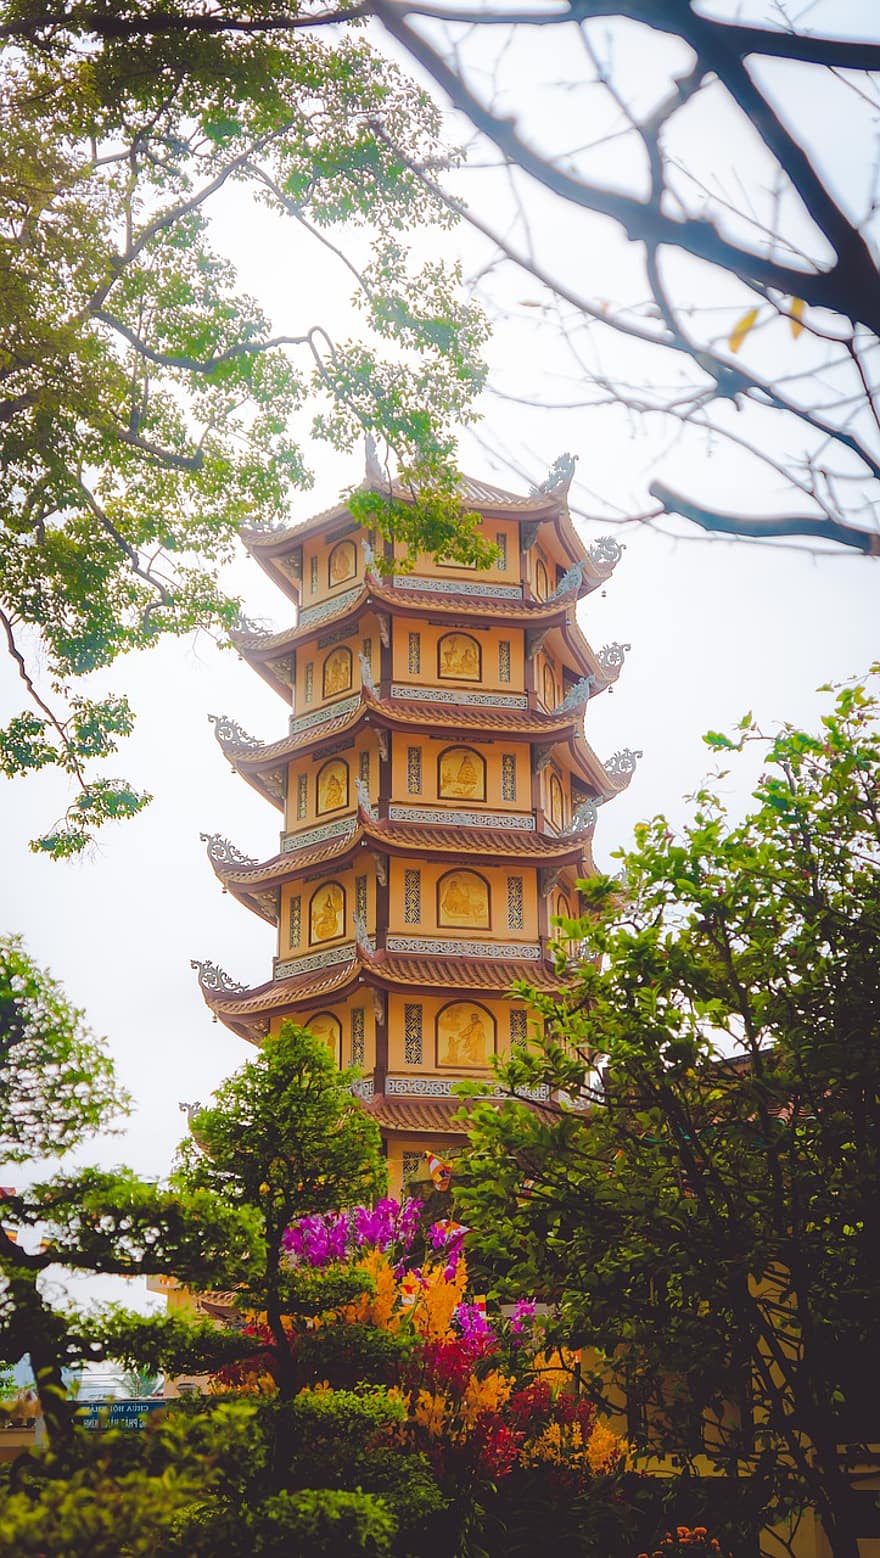 oude, Boeddha, Vietnam, Hoi Khanh-pagode, toren, architectuur, traditioneel, Bekende plek, culturen, geschiedenis, religie